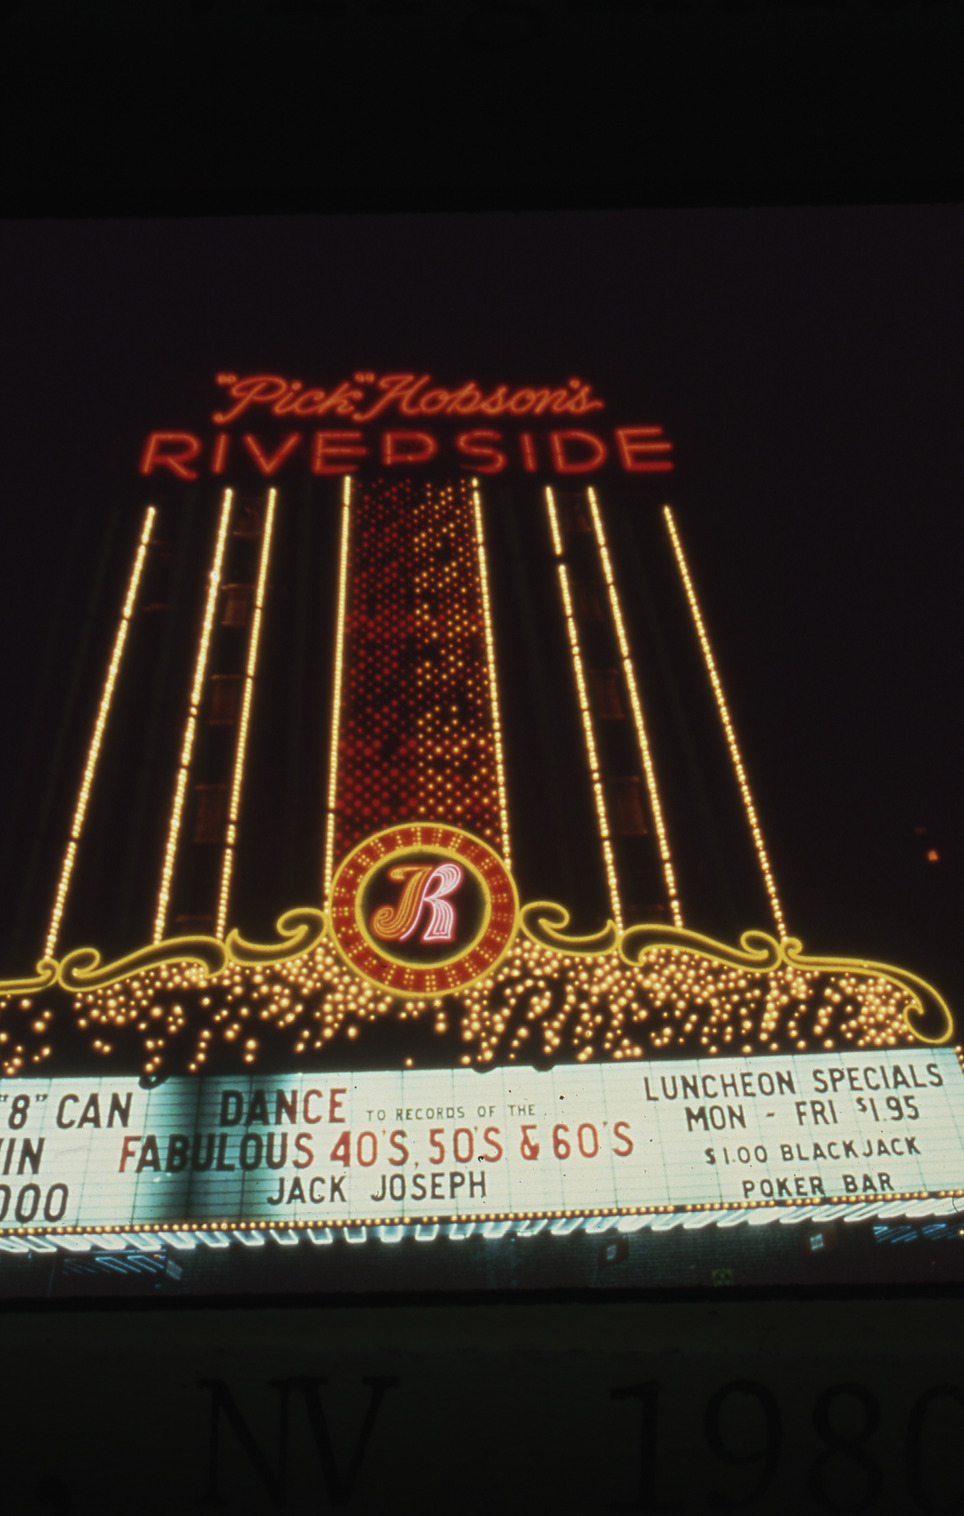 Riverside Hotel wall sign, Reno, Nevada: photographic print